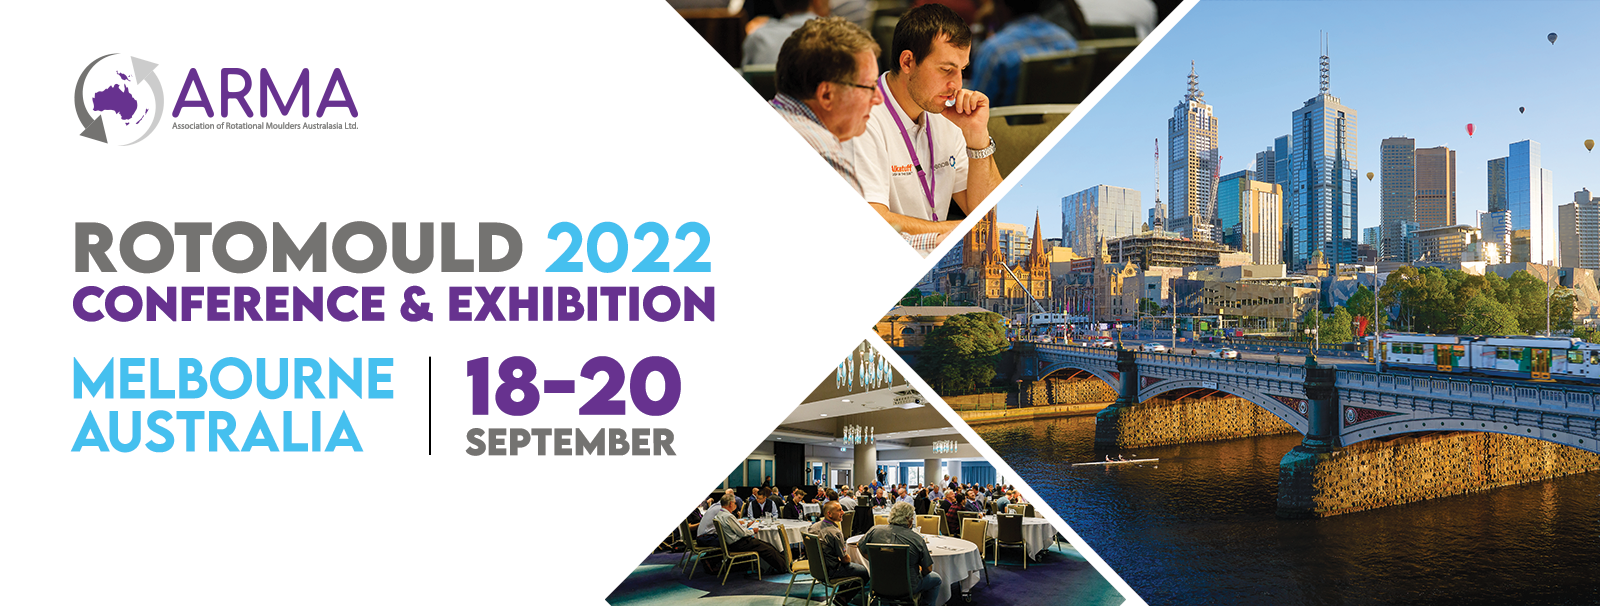 Rotomould Conference & Exhibition 2022